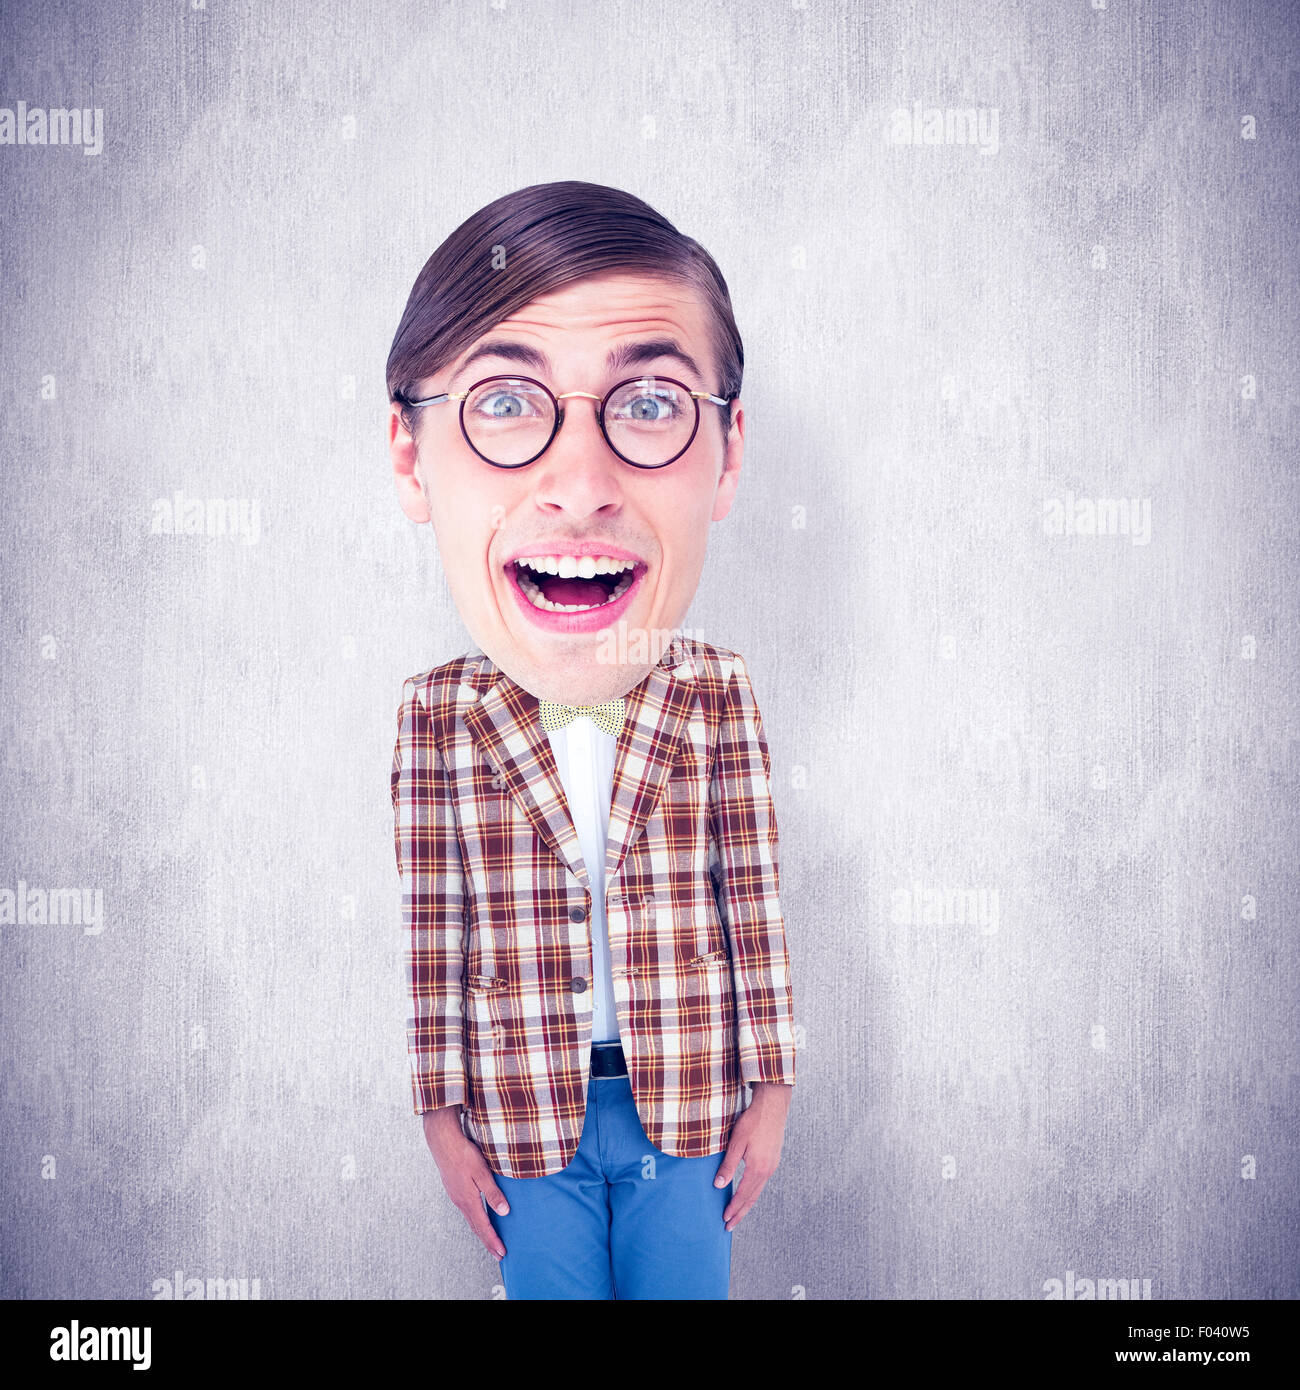 Composite image of nerd smiling Stock Photo